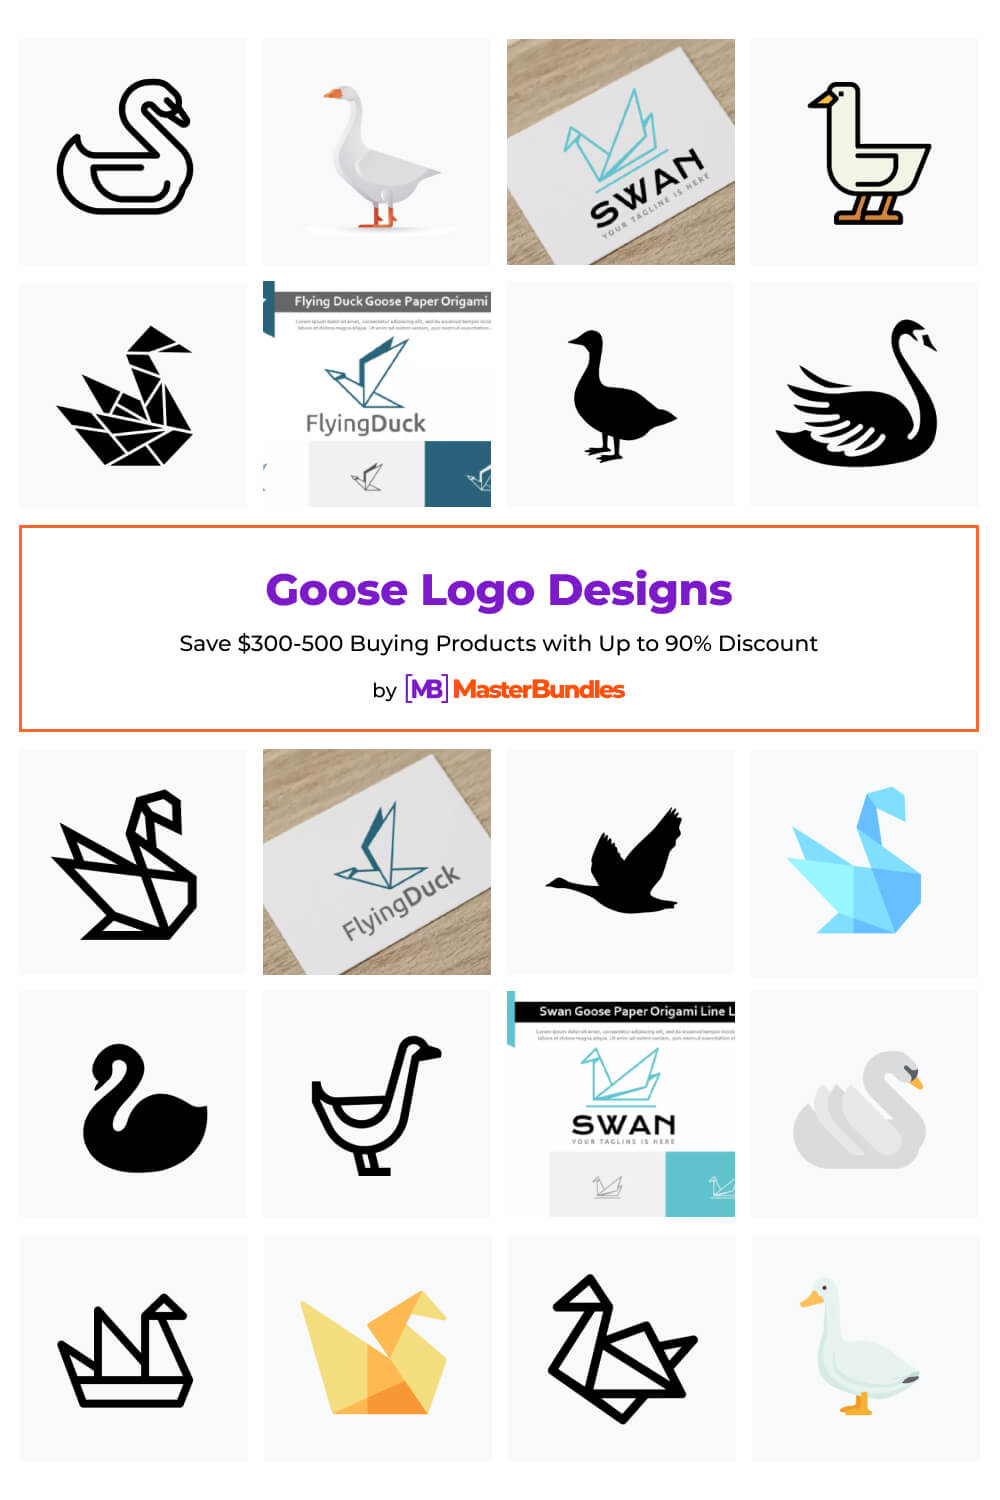 goose logo designs pinterest image.